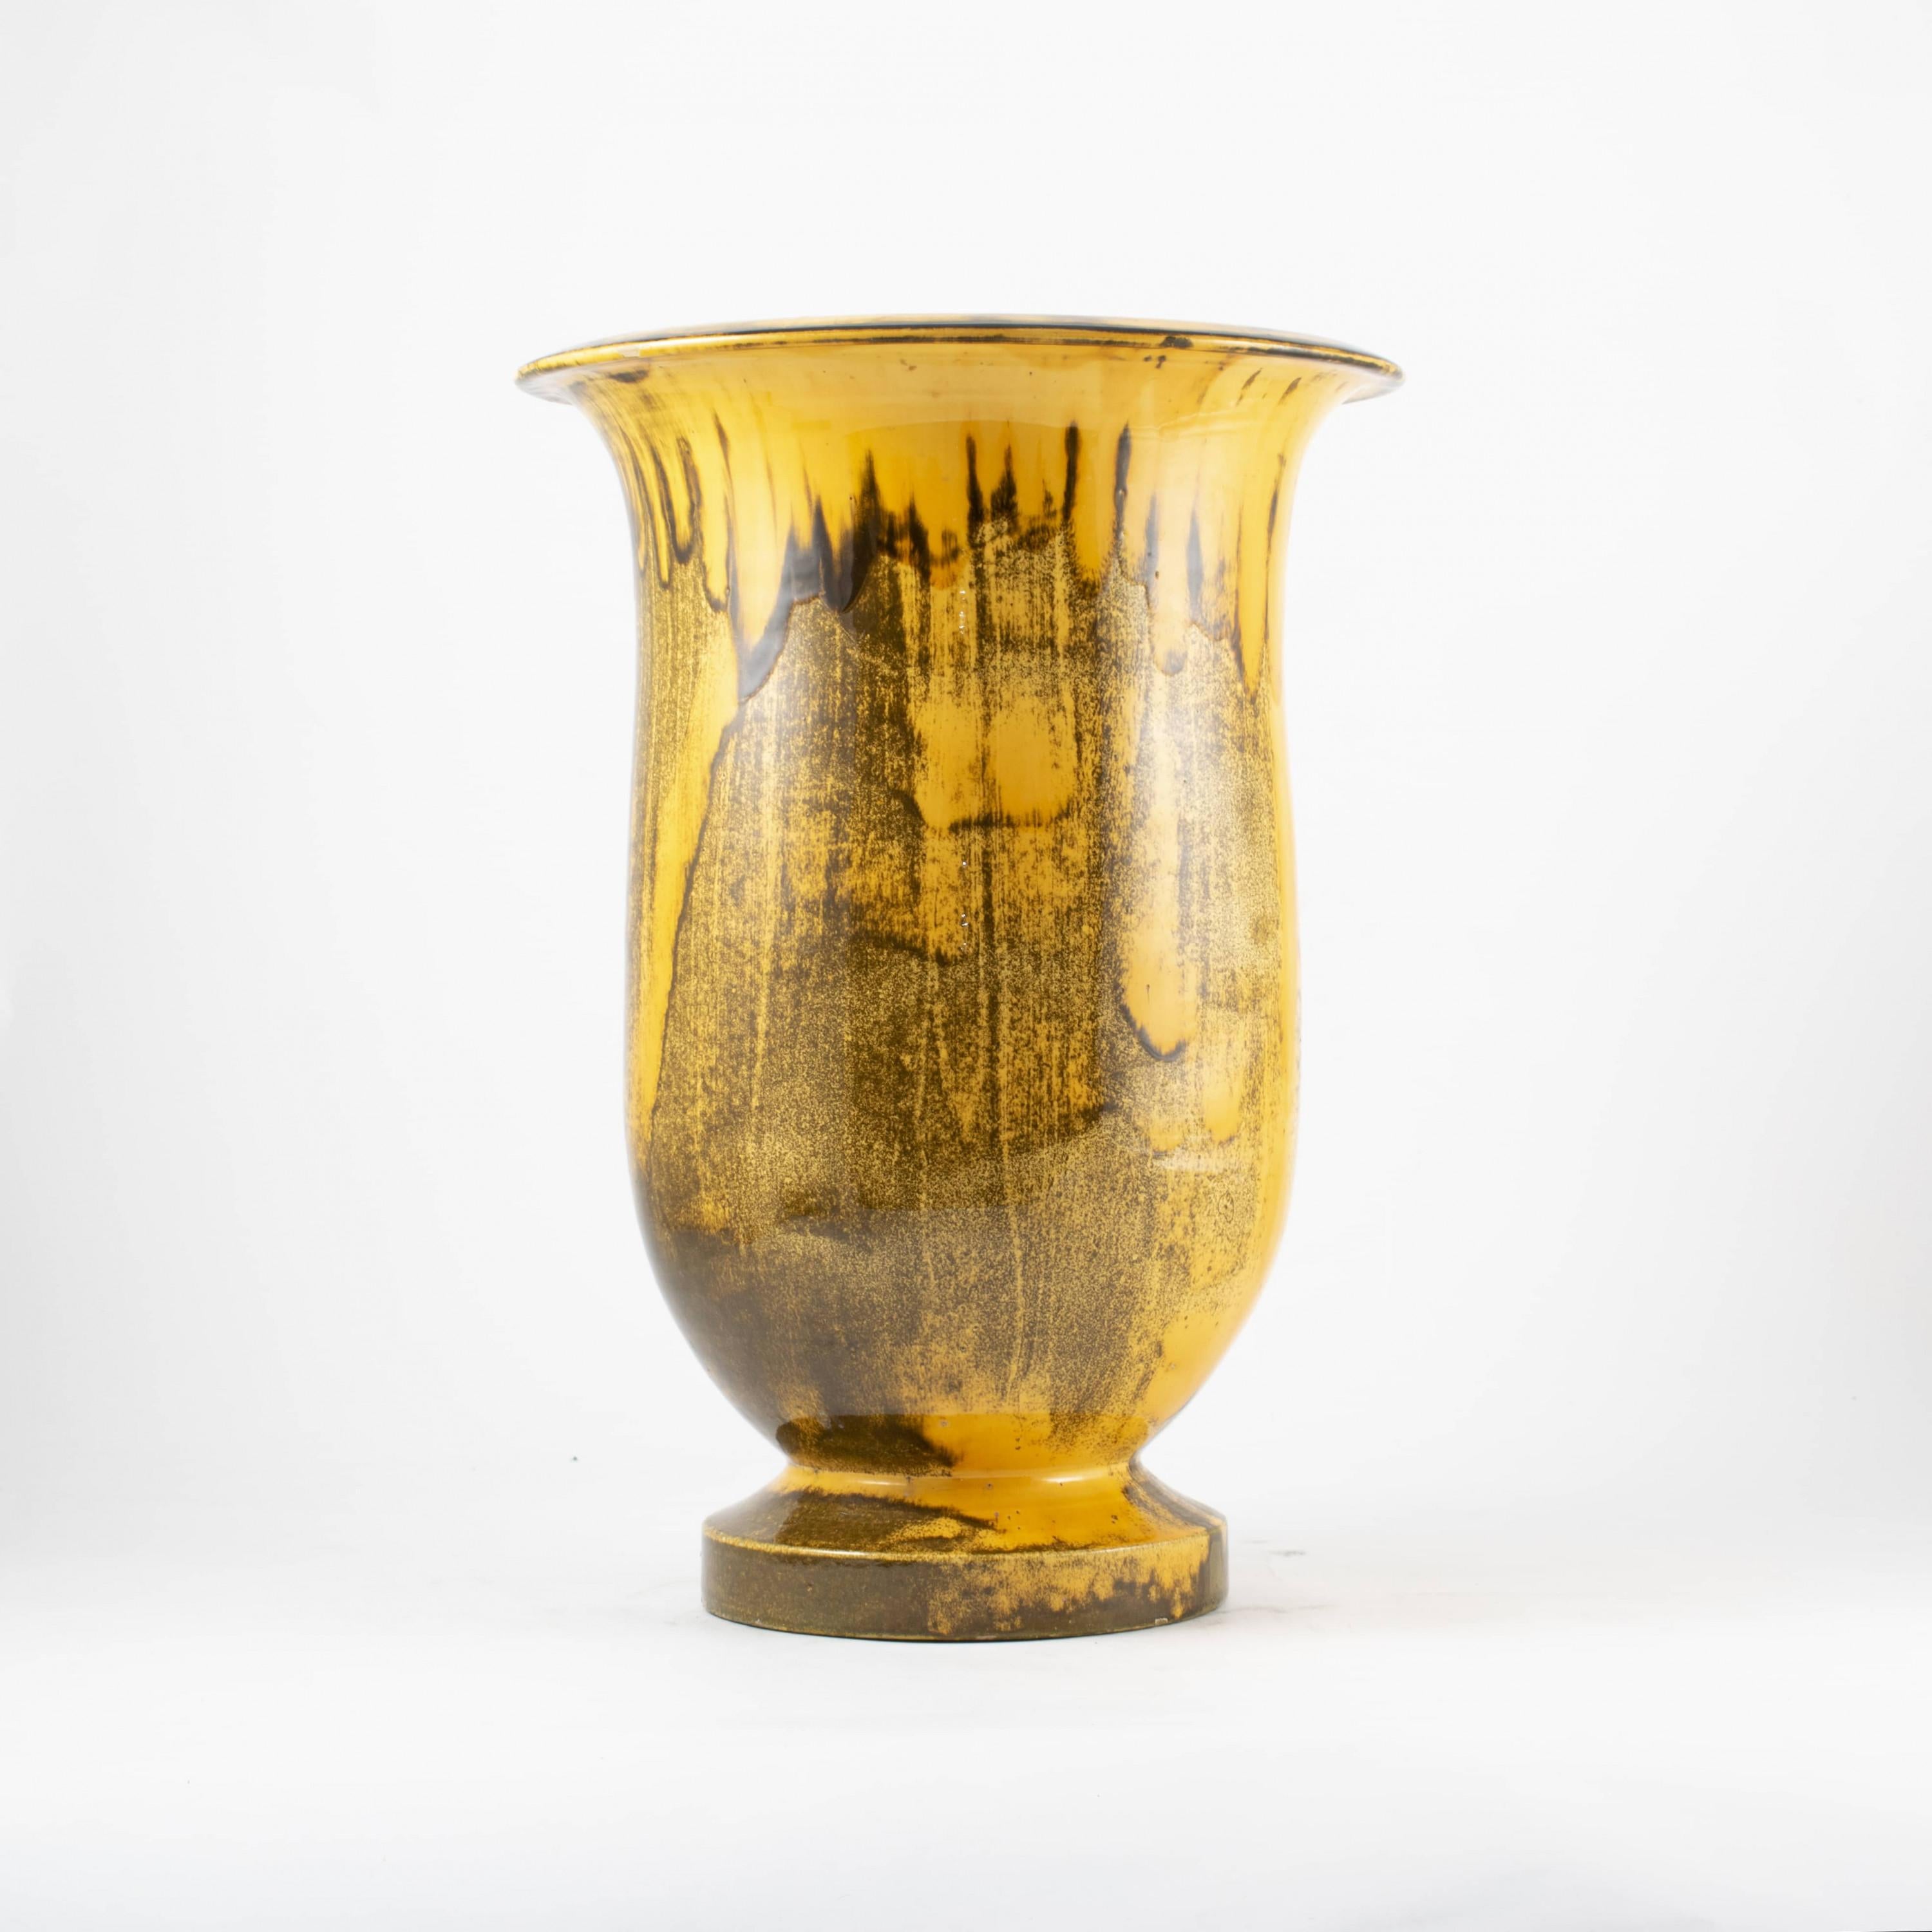 Large floor vase from Kähler with yellow / dark glaze.
Signed under bottom 